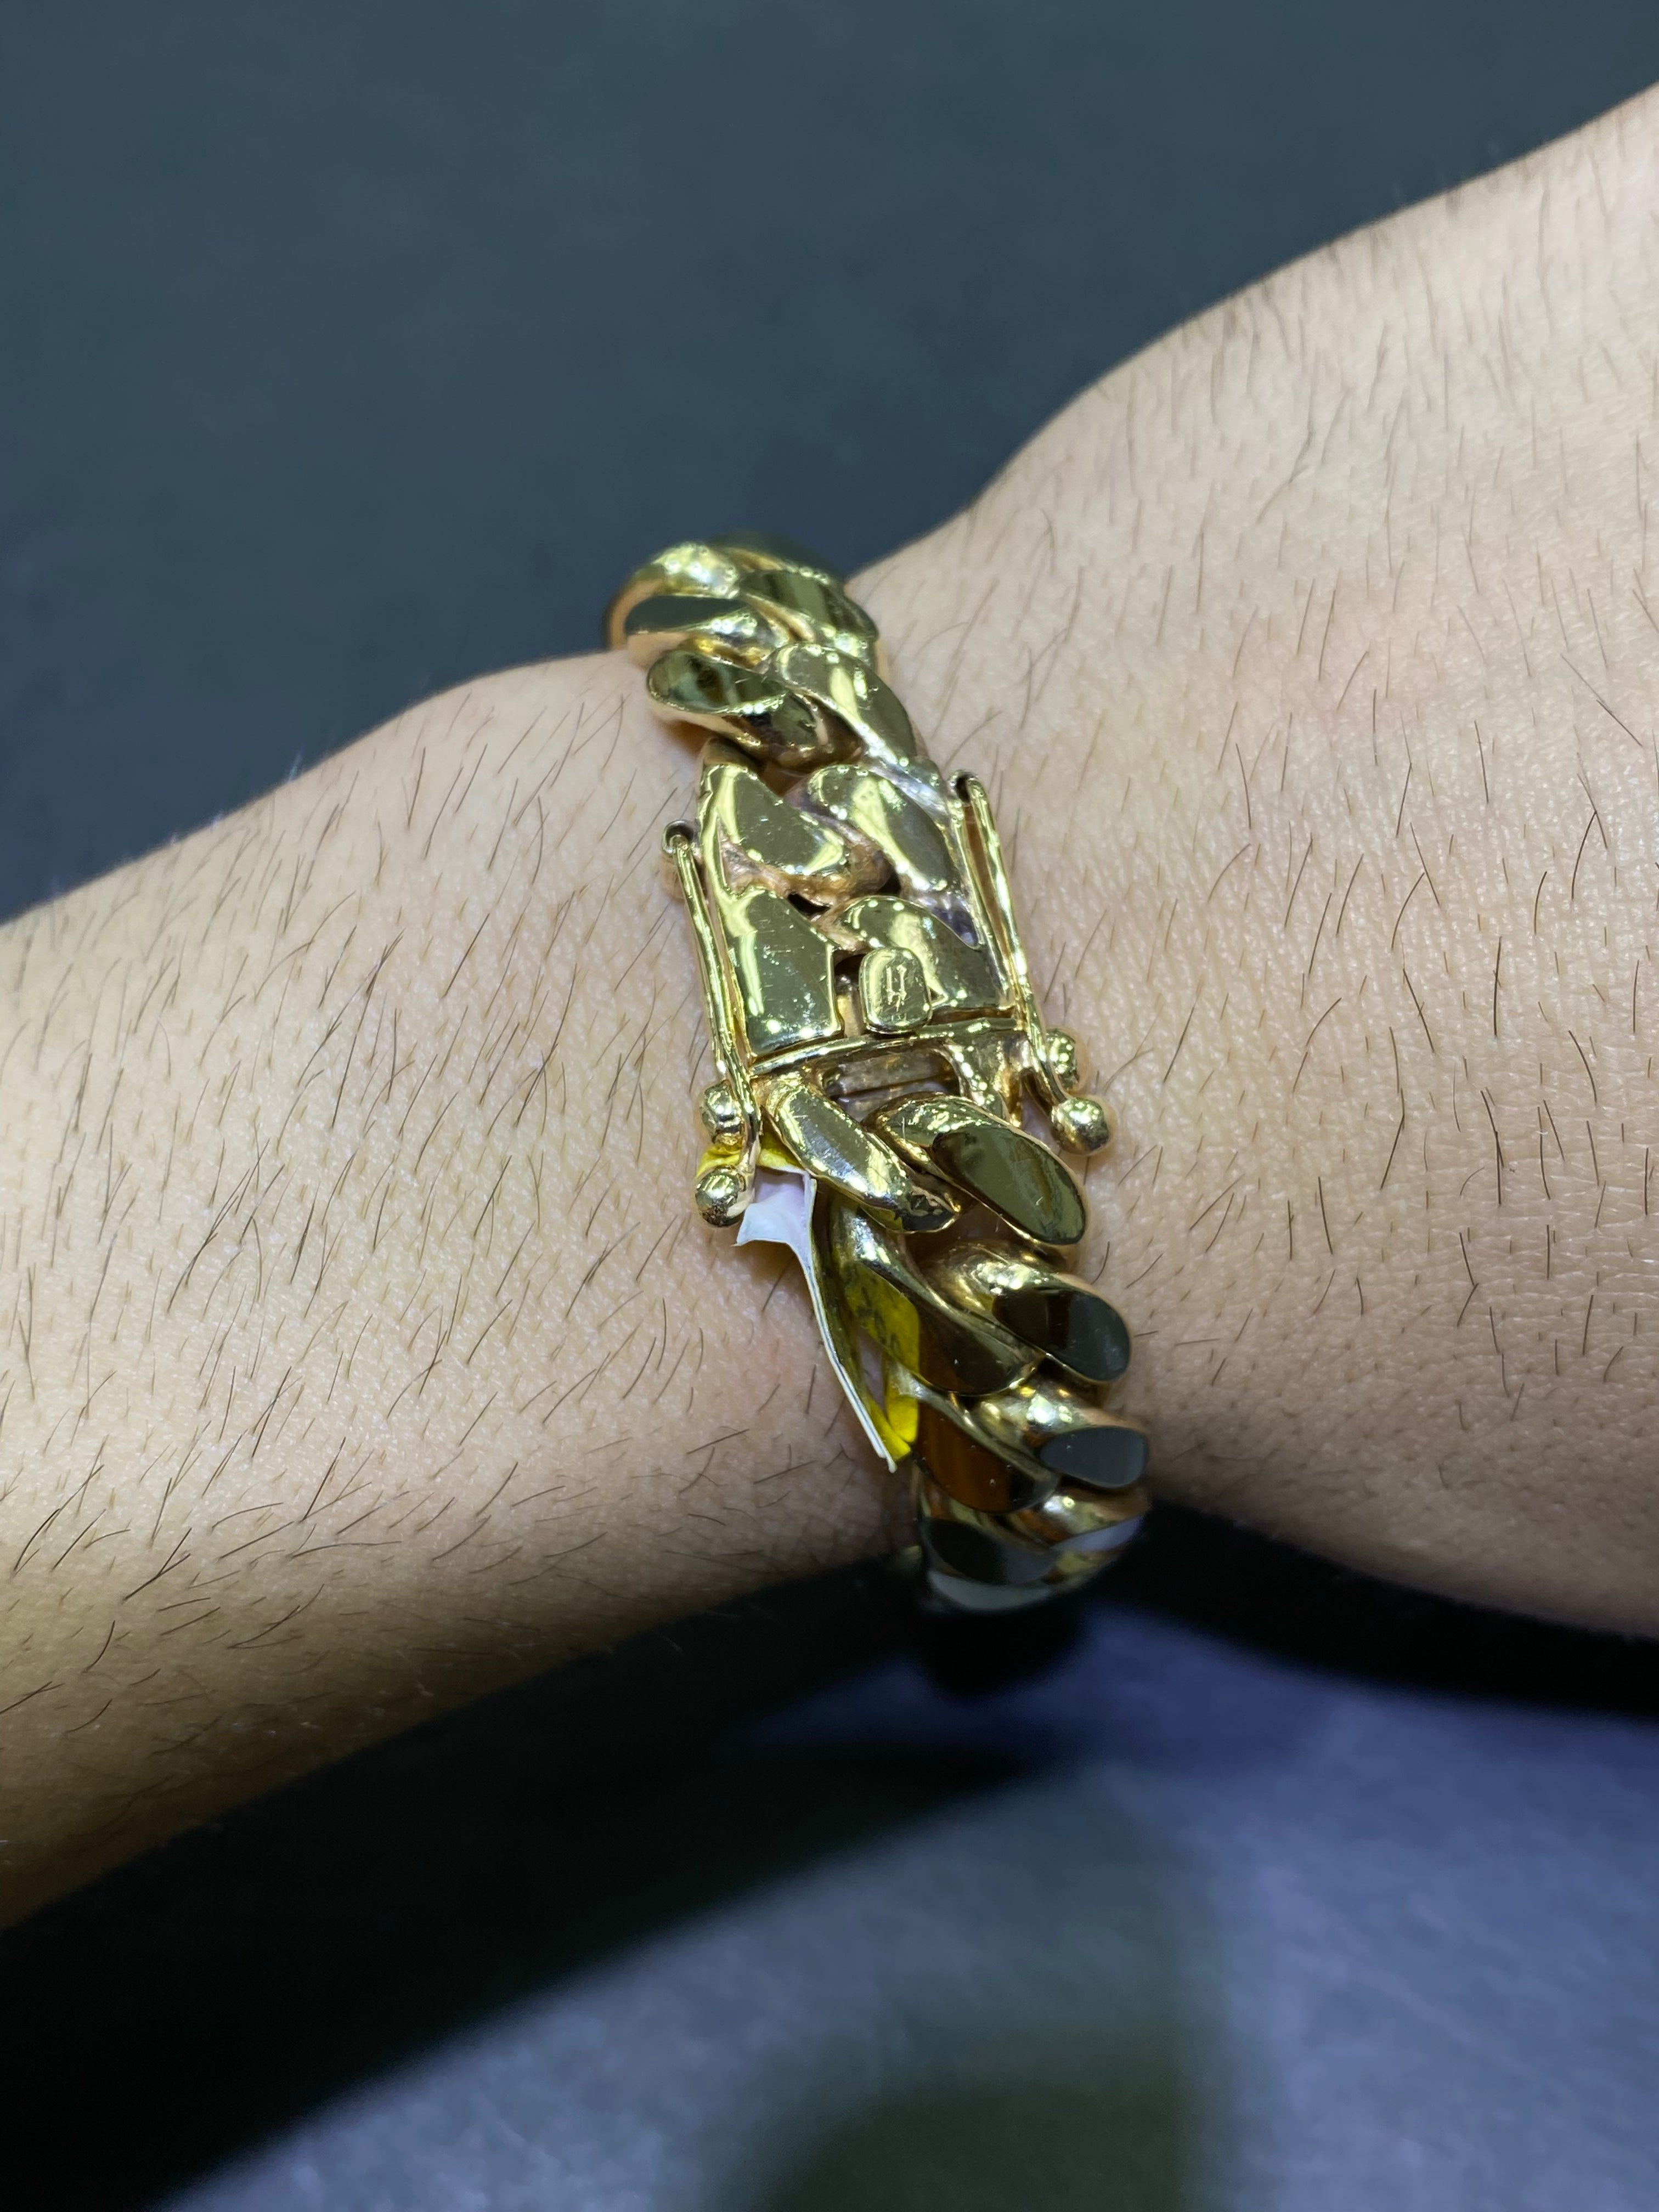 new 10k handmade solid miami cuban link bracelet